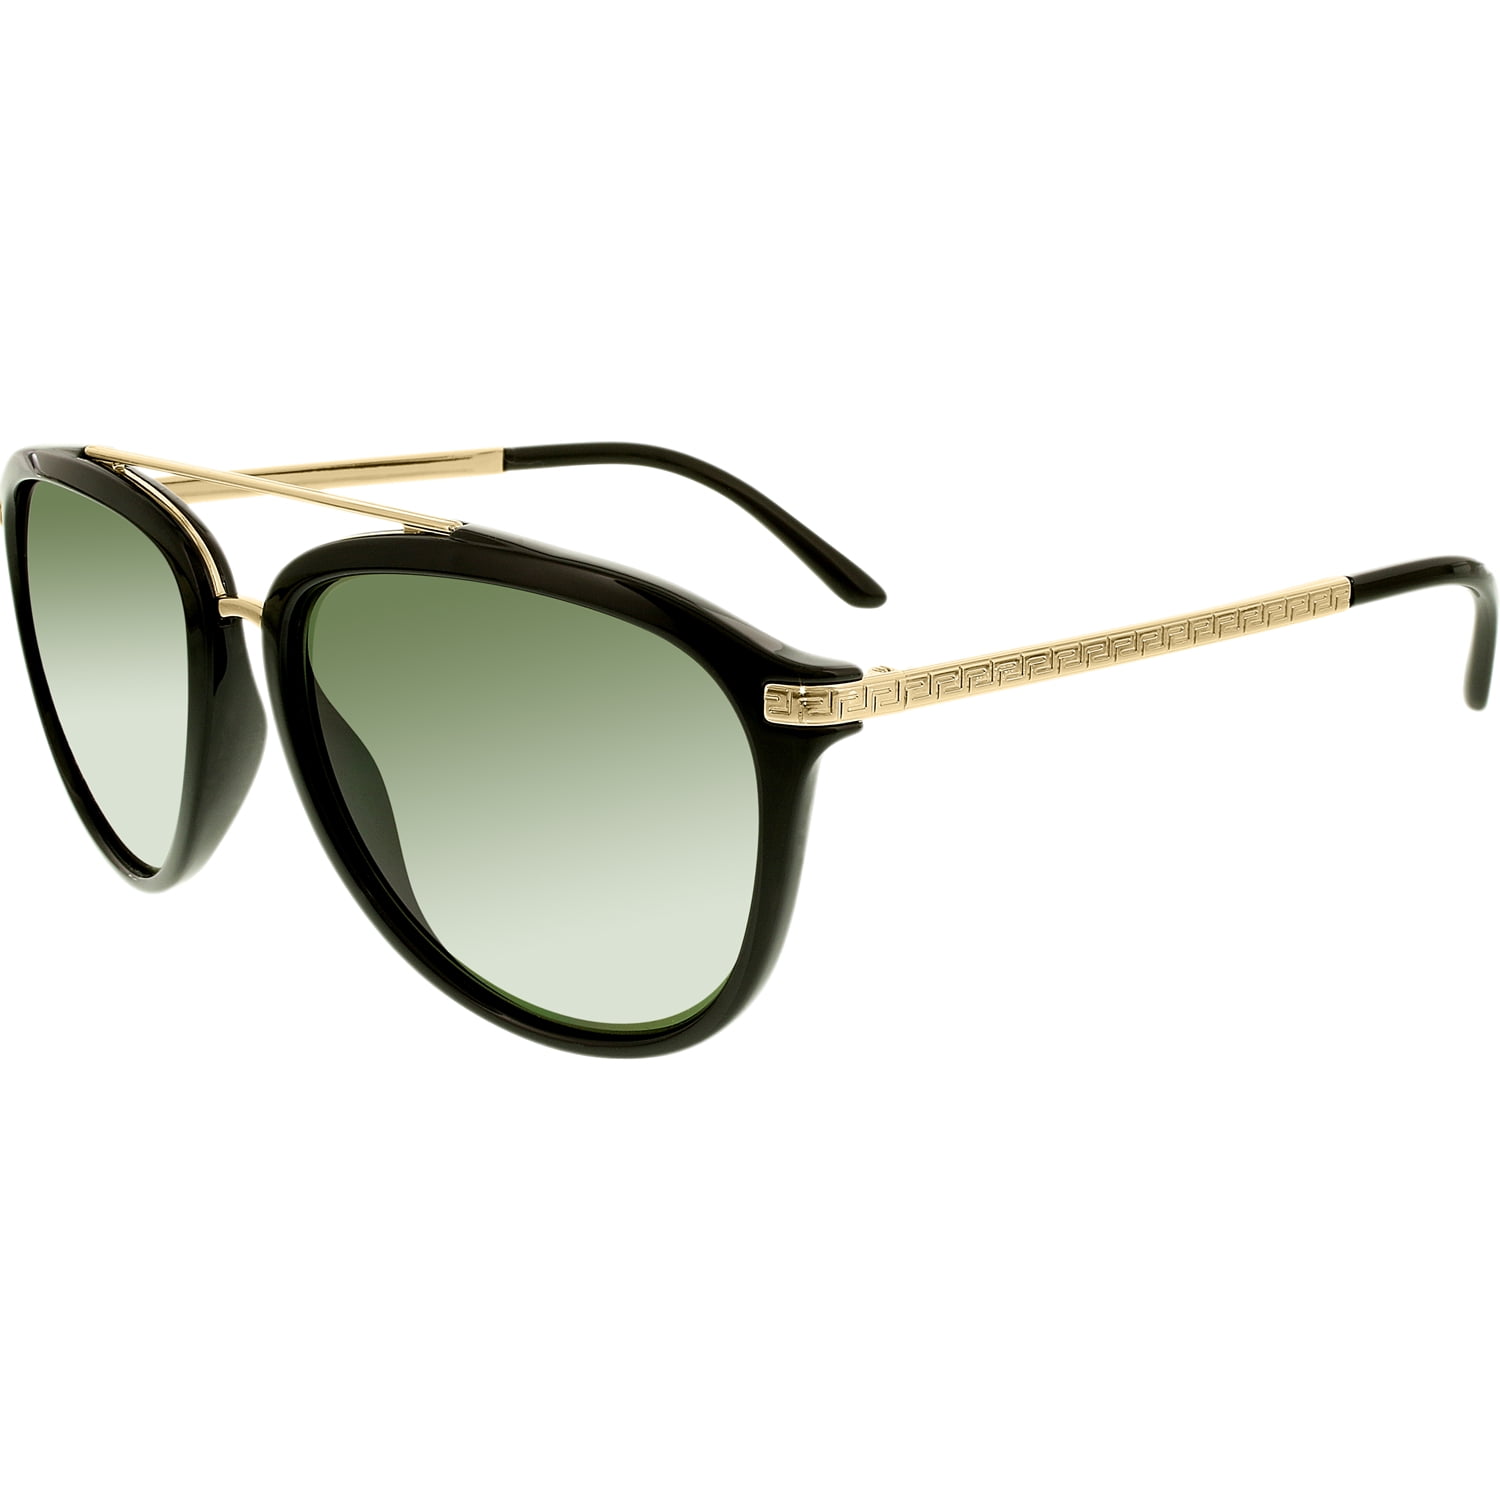 NWT VERSACE Sunglasses VE 4299 GB1/9A Polarized Black Gold Green 58 mm GB19A 